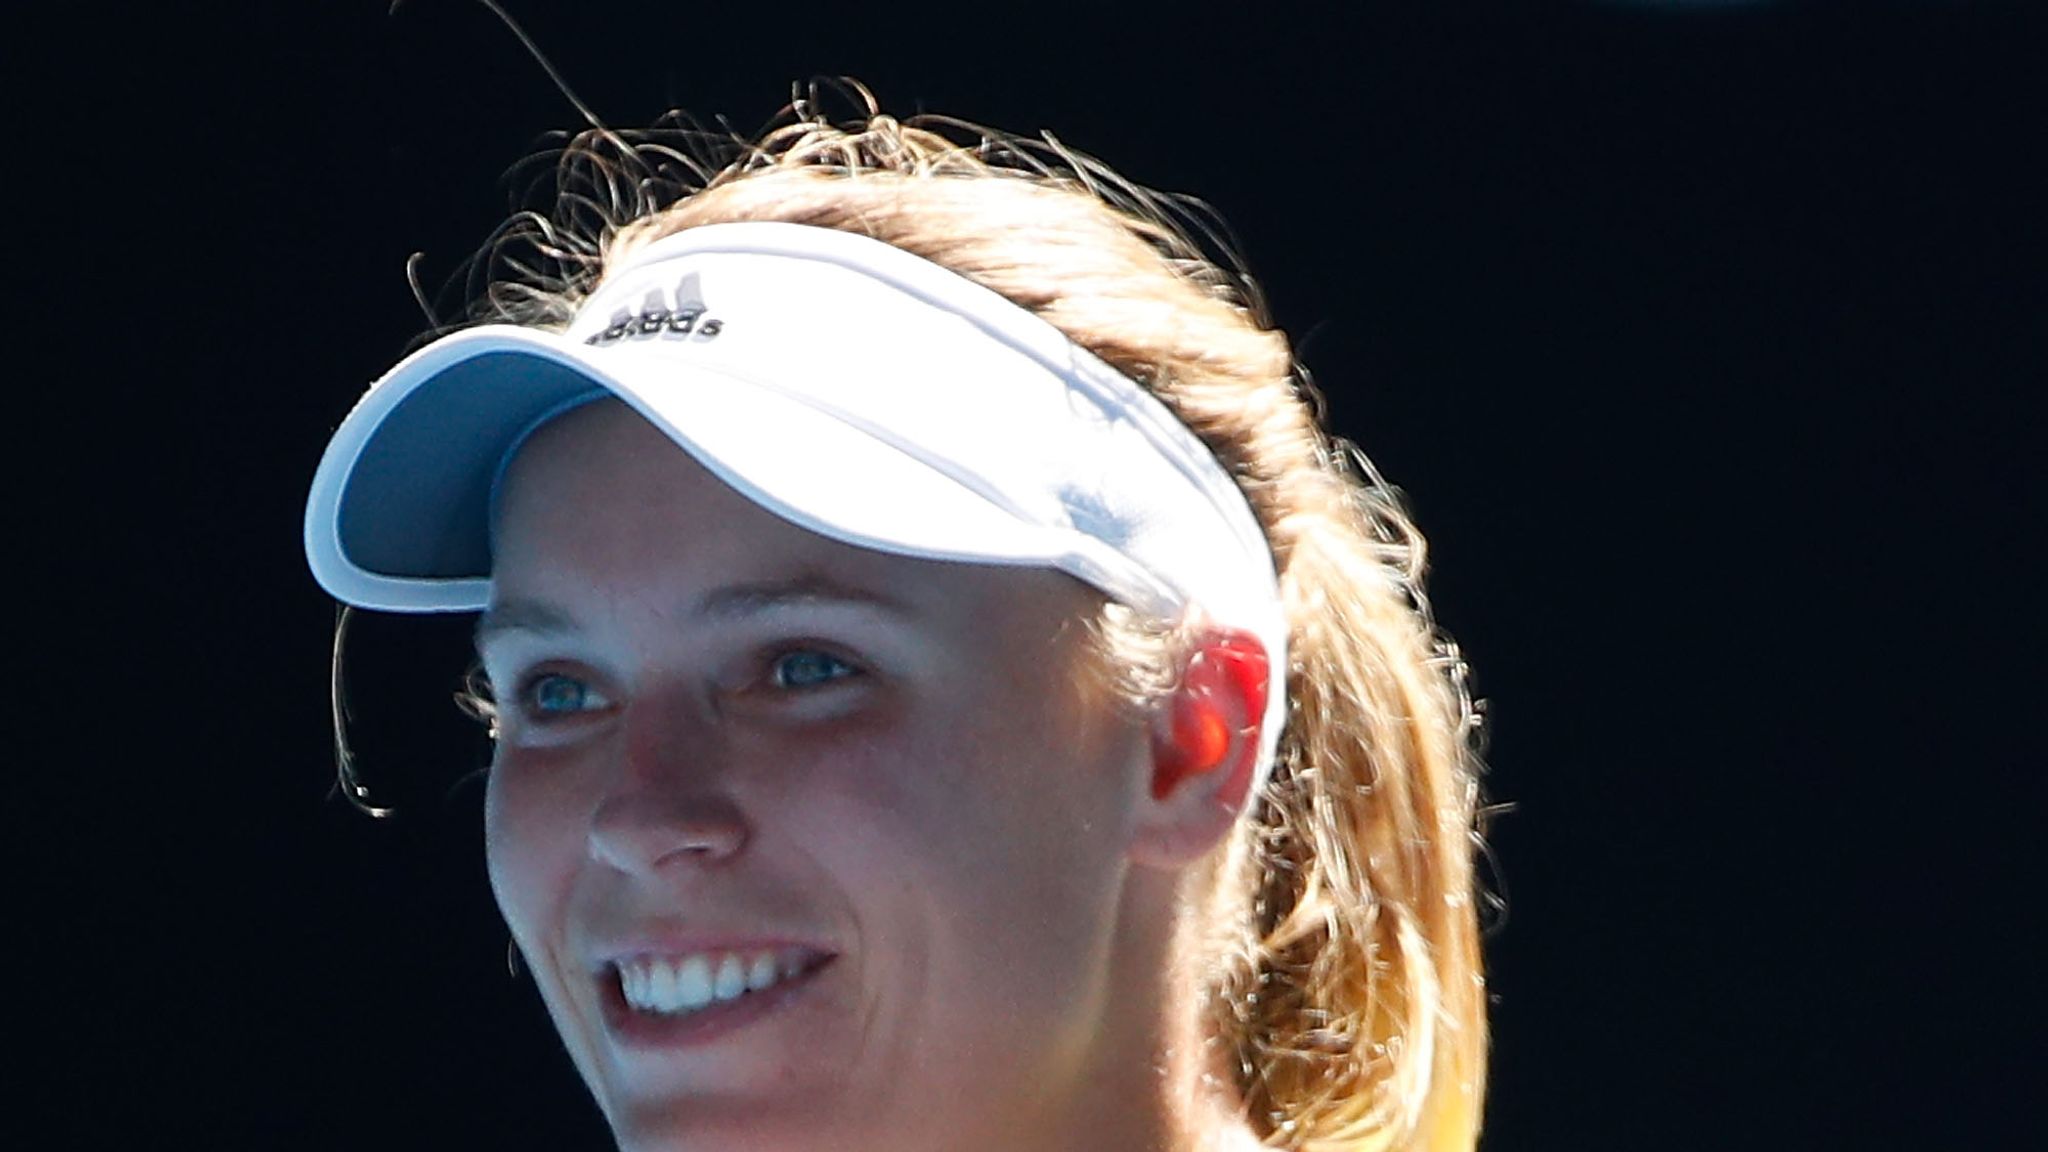 Australian Open Caroline Wozniacki saves two match points before beating Jana Fett | Tennis News | Sky Sports